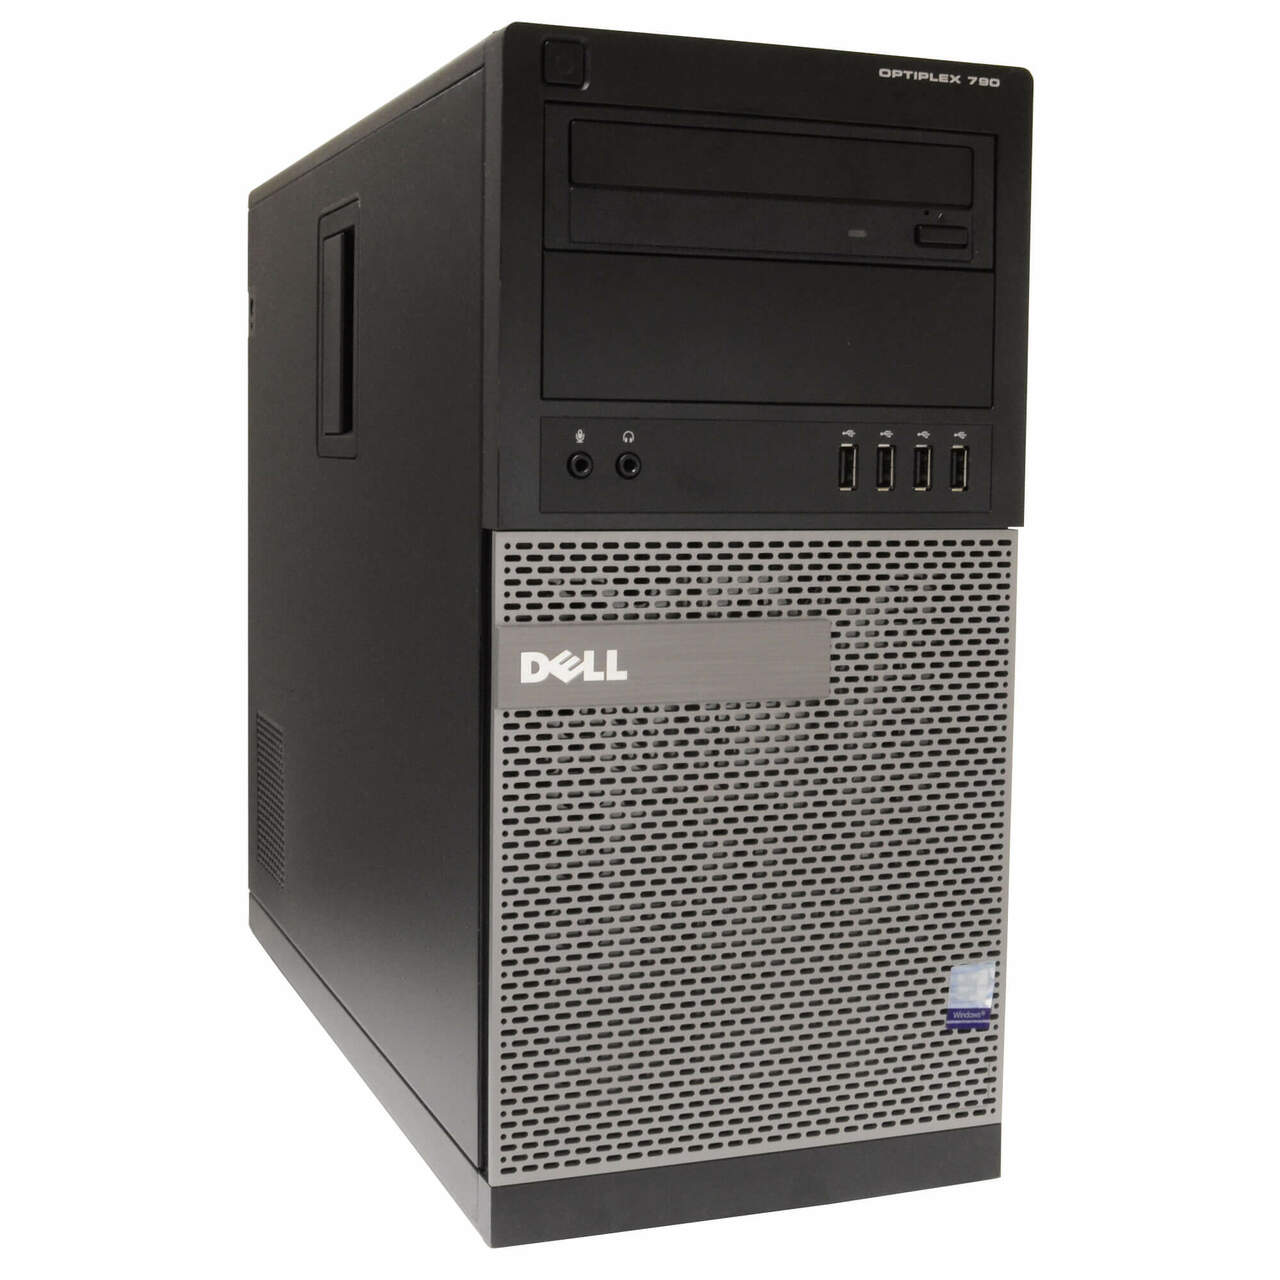 Dell OptiPlex 790 Tower Computer: Intel Core i5 (2nd Gen), Windows 10, WiFi